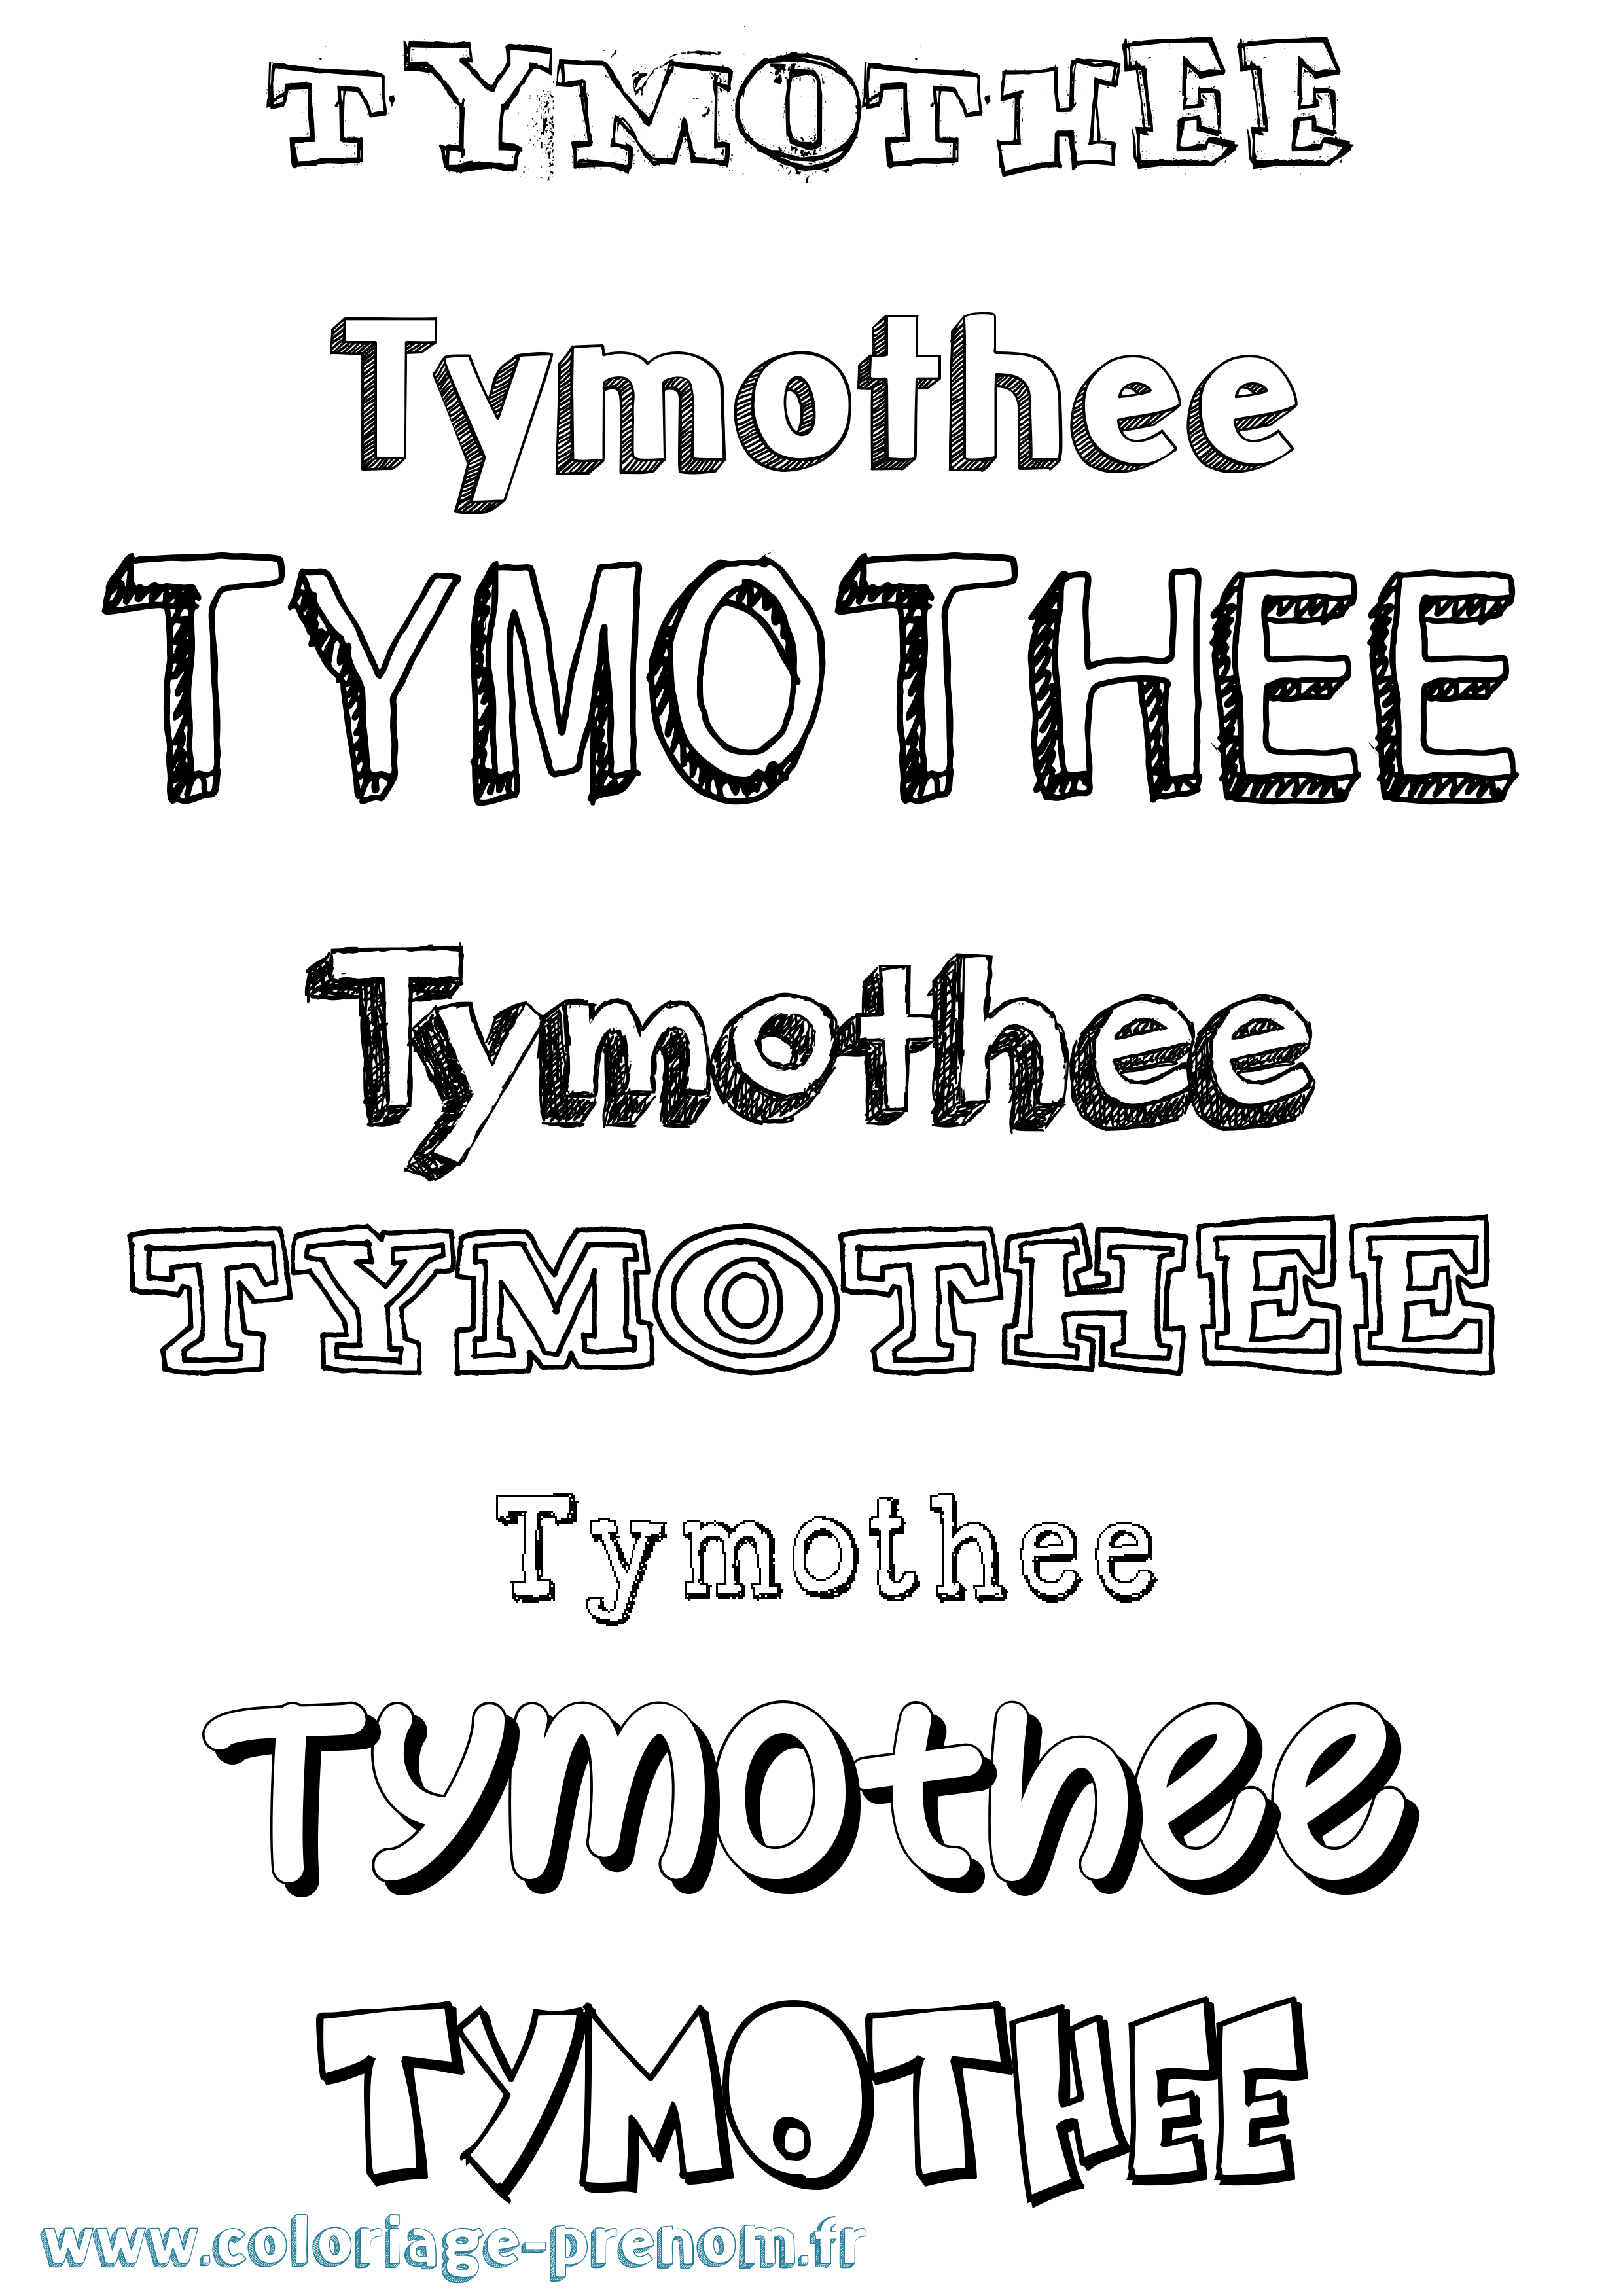 Coloriage prénom Tymothee Dessiné